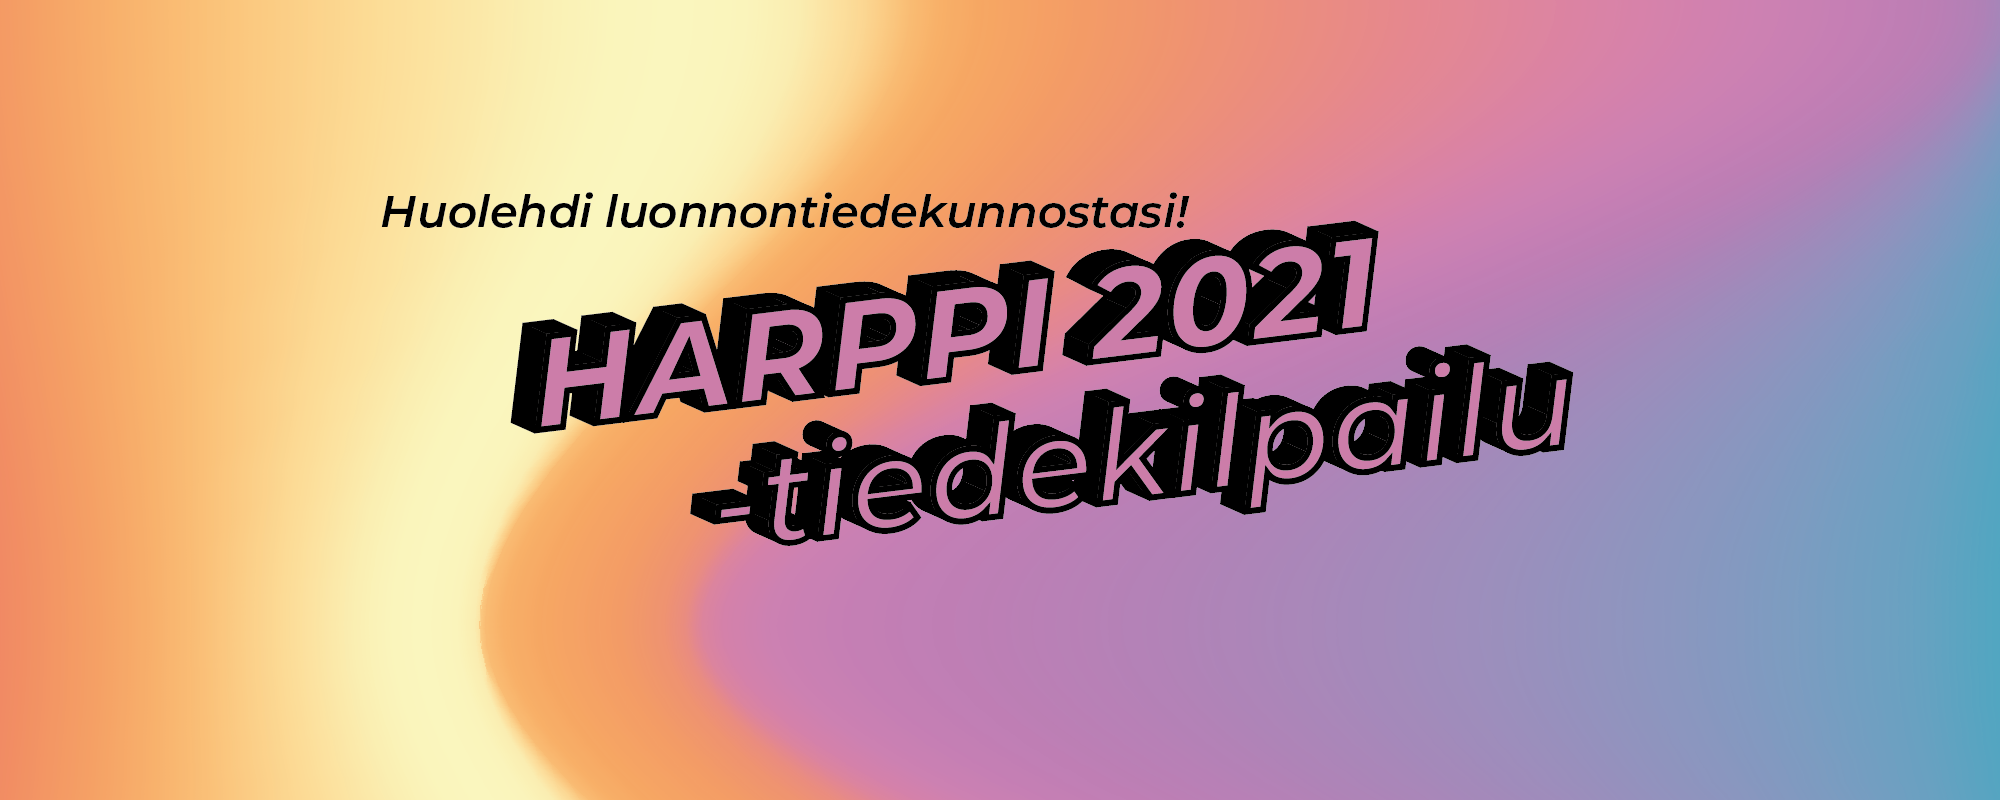 Harppi 2021 -tiedekilpailu